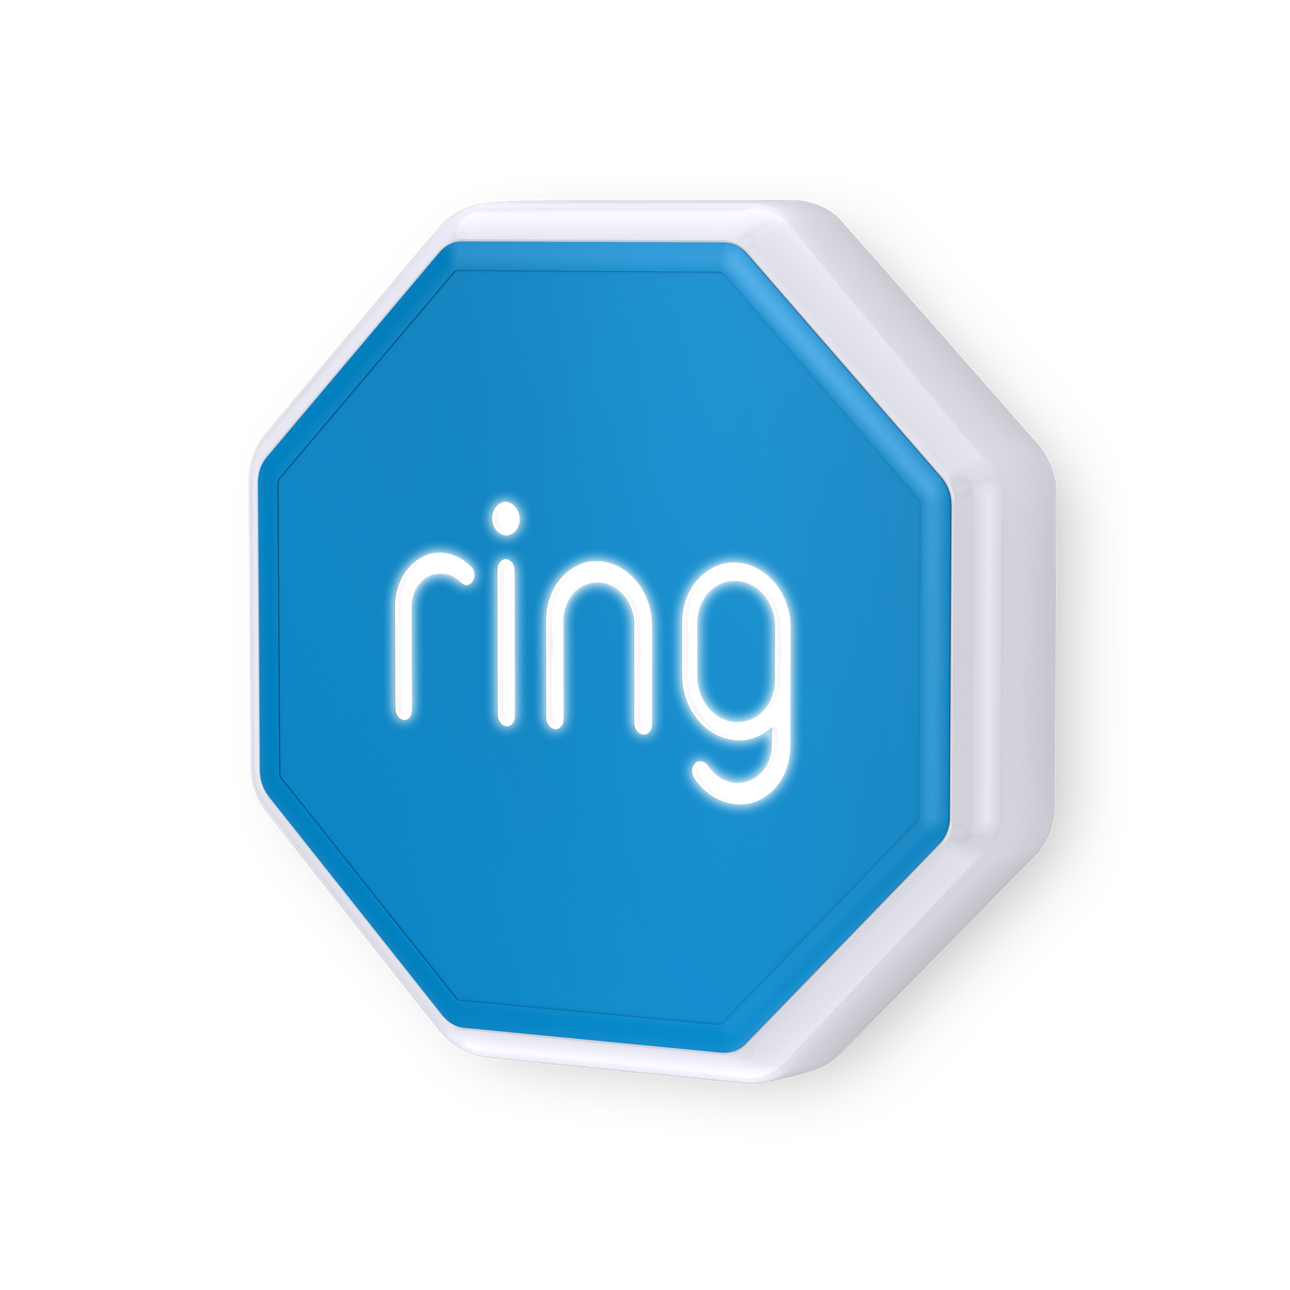 en-uk.ring.com